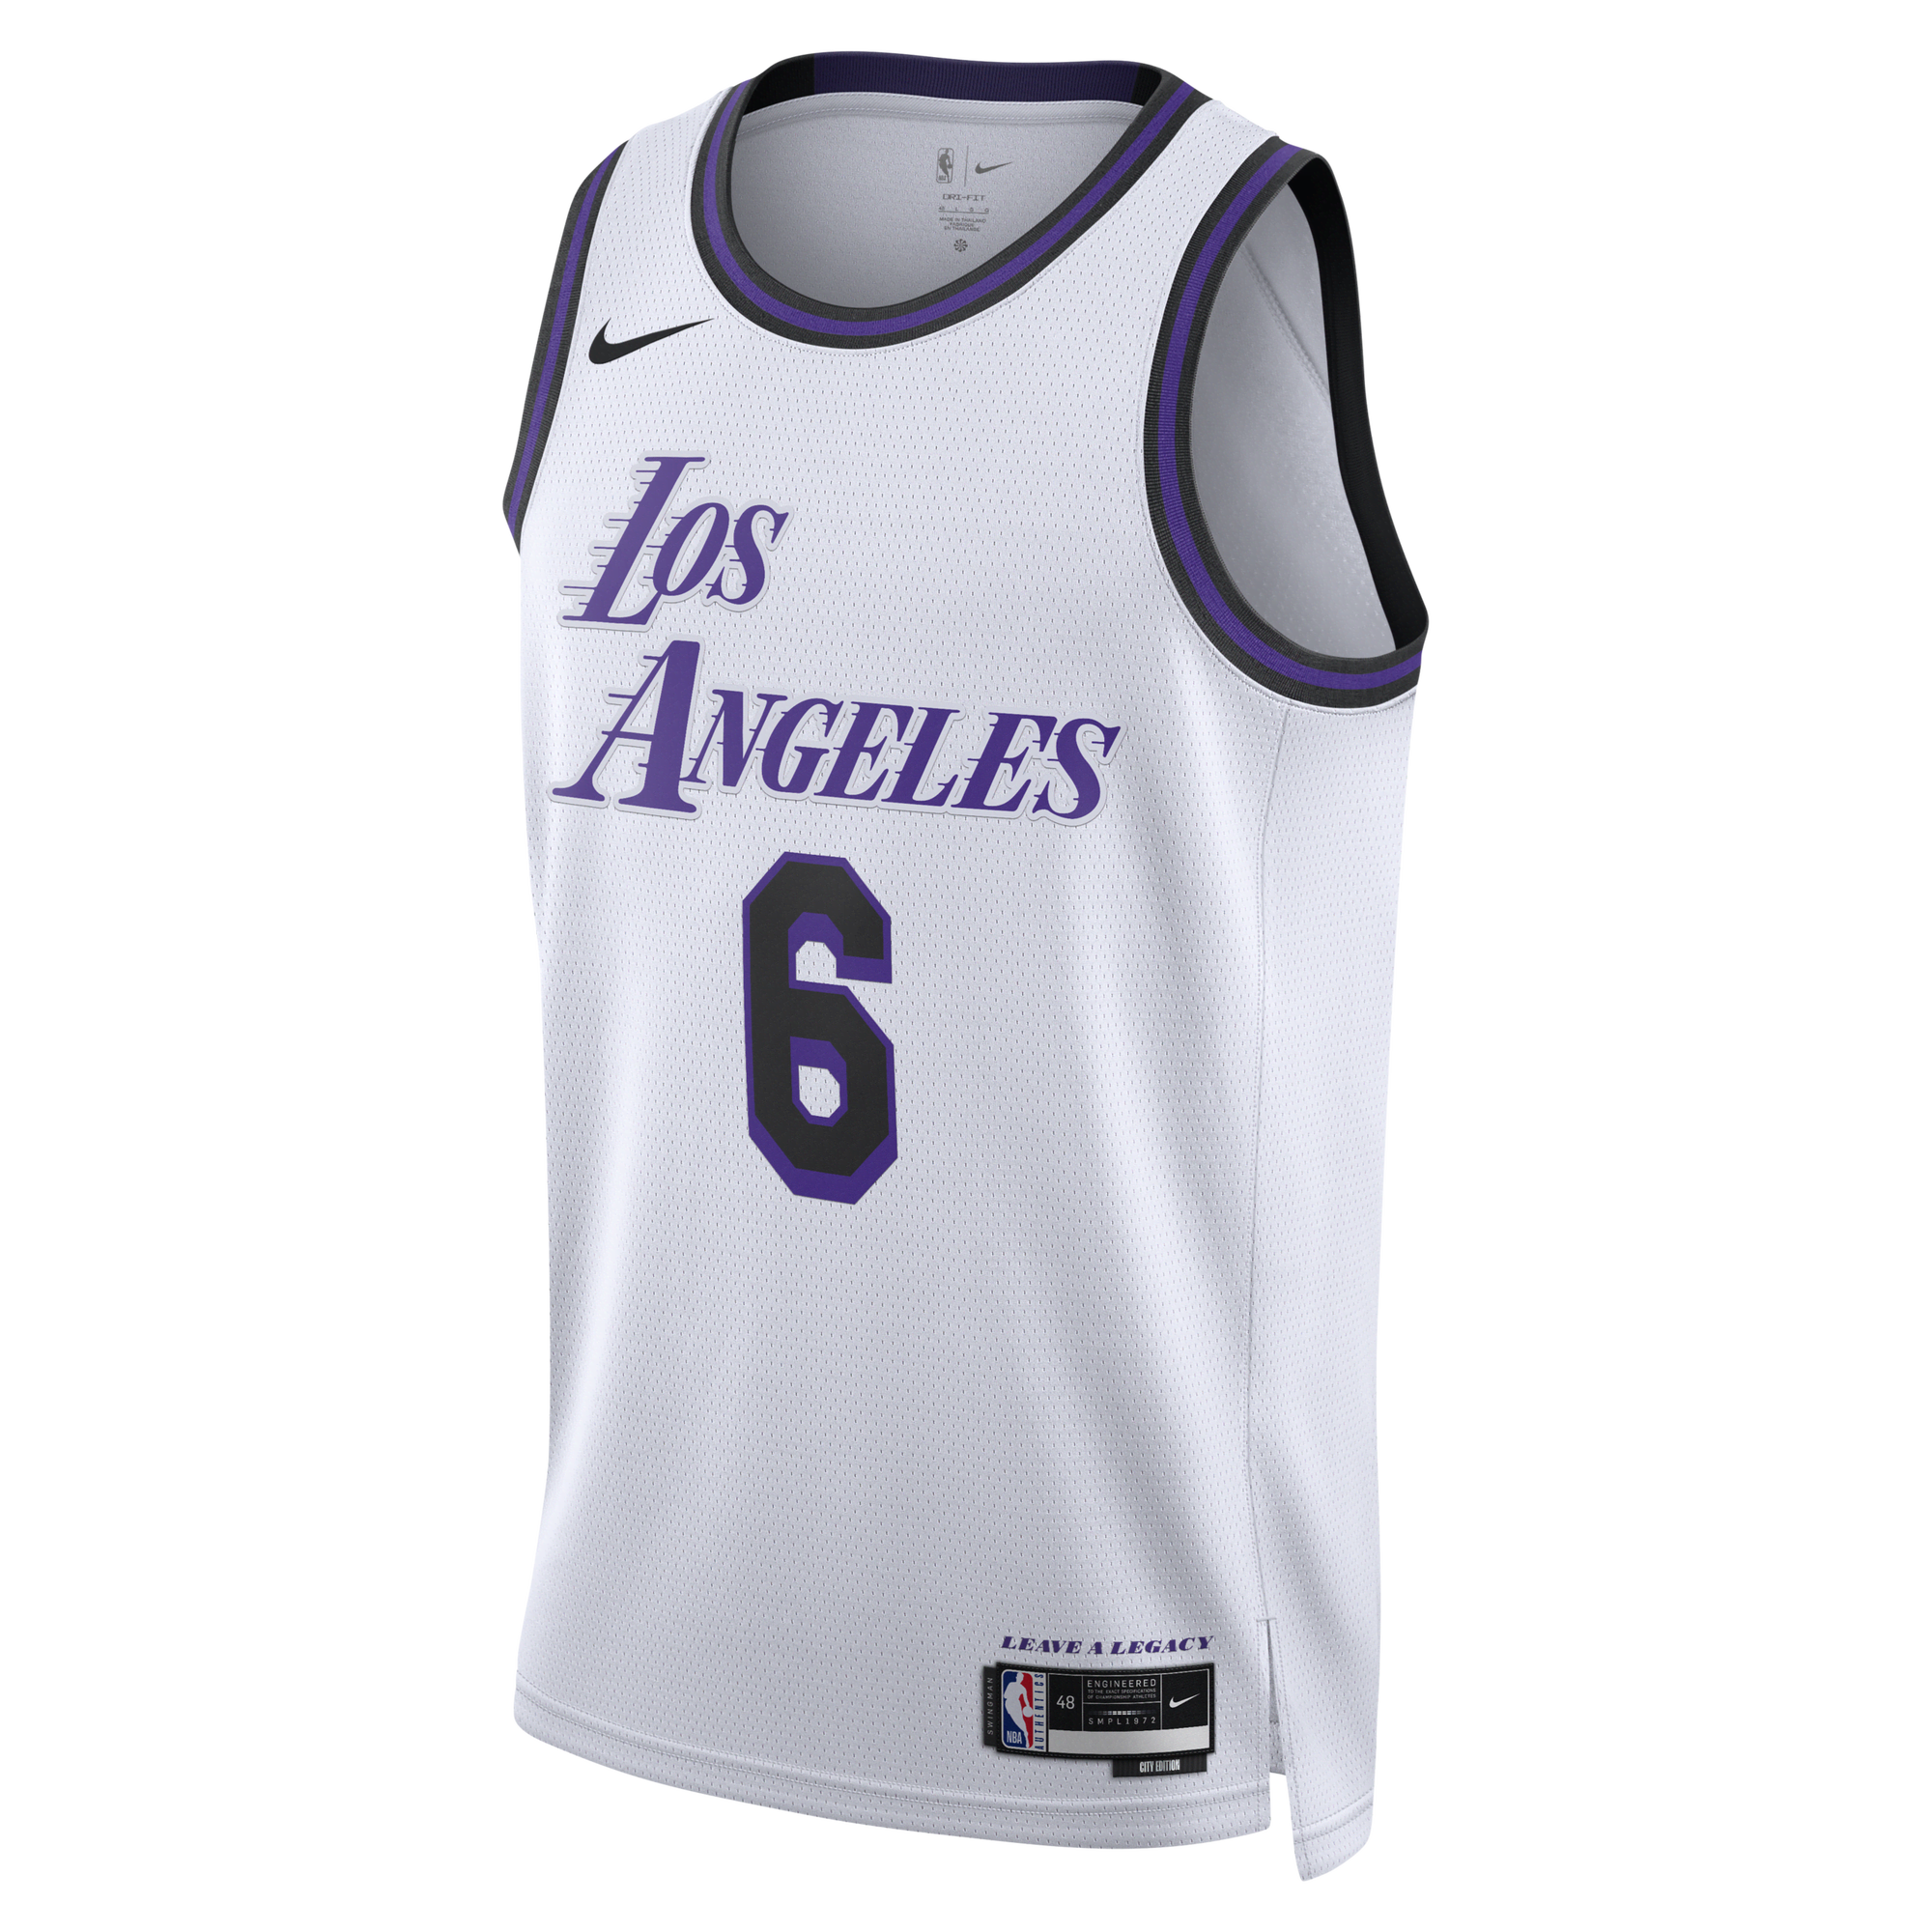 Los Angeles Lakers Nike Replica Box Set - Lebron James - Toddler